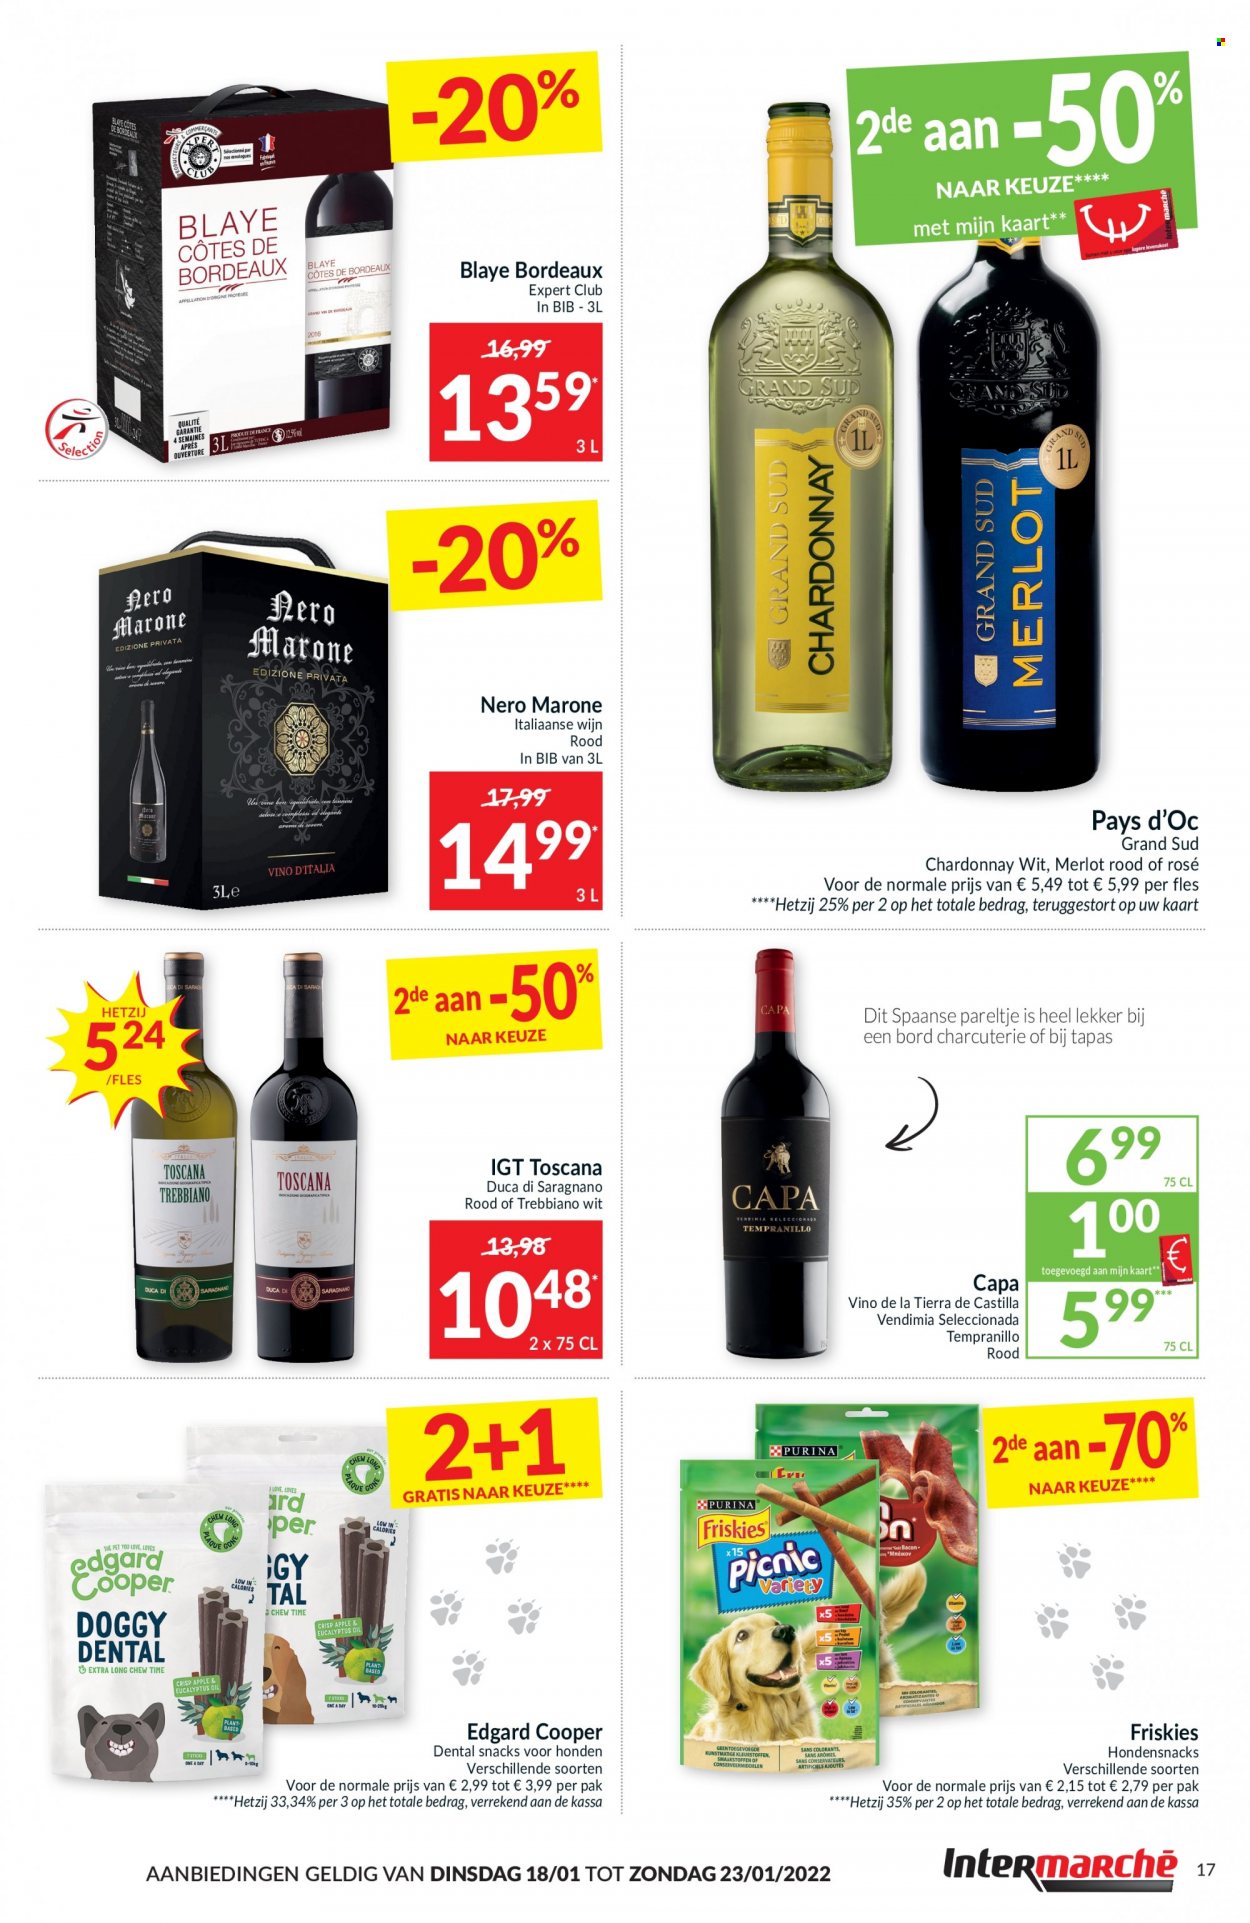 thumbnail - Intermarché-aanbieding - 18/01/2022 - 23/01/2022 -  producten in de aanbieding - tapas, Chardonnay, Merlot, wijn, Friskies. Pagina 17.